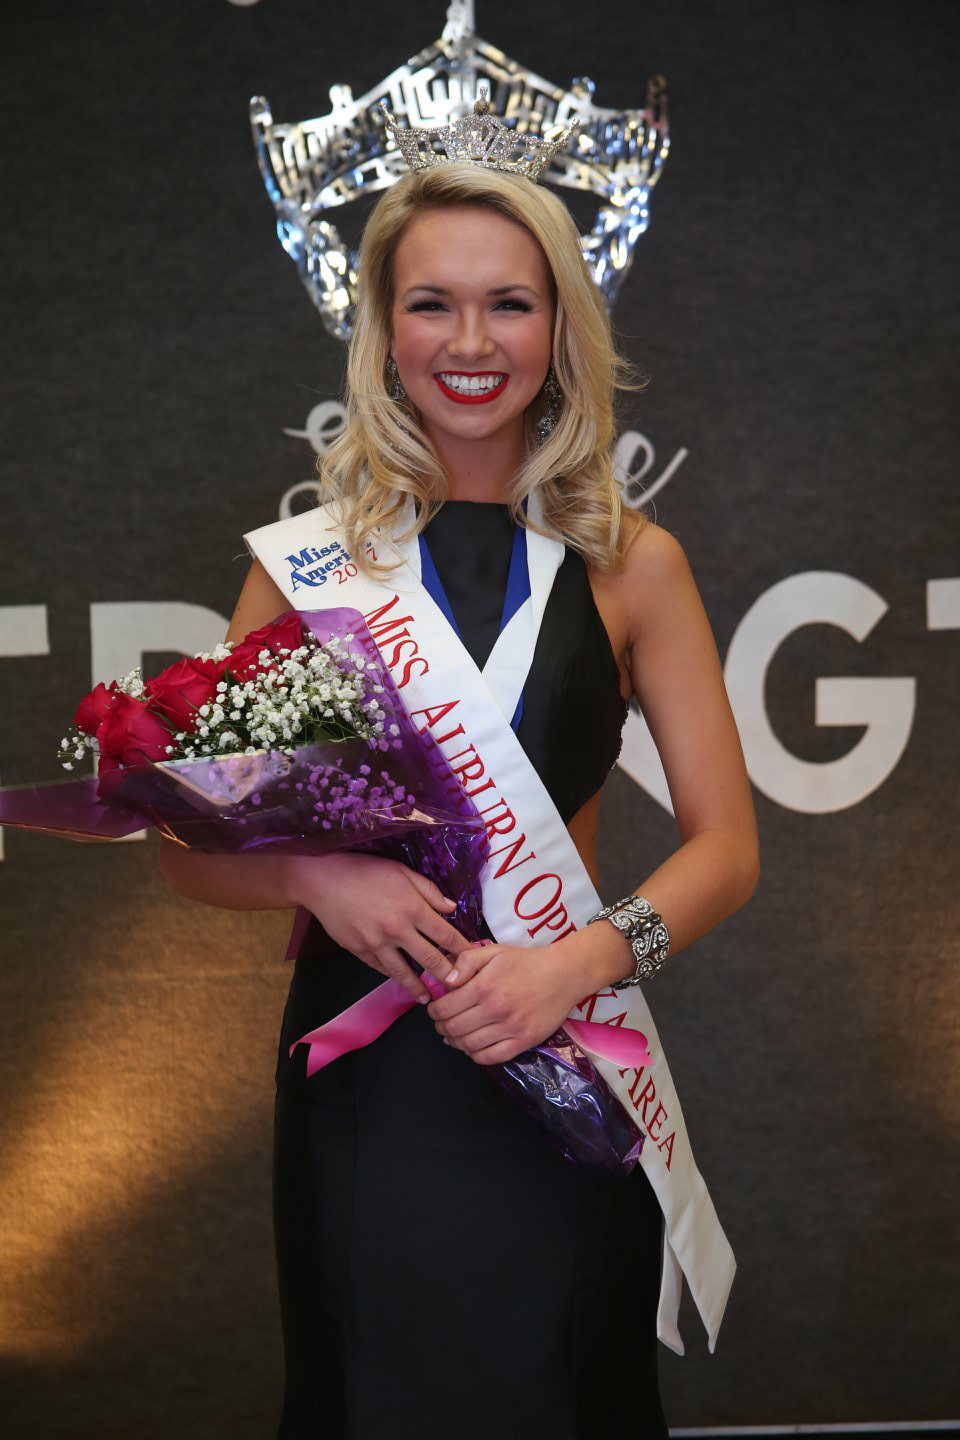 Beauregard woman crowned Miss Auburn Opelika, will compete in Miss Alabama pageant in June